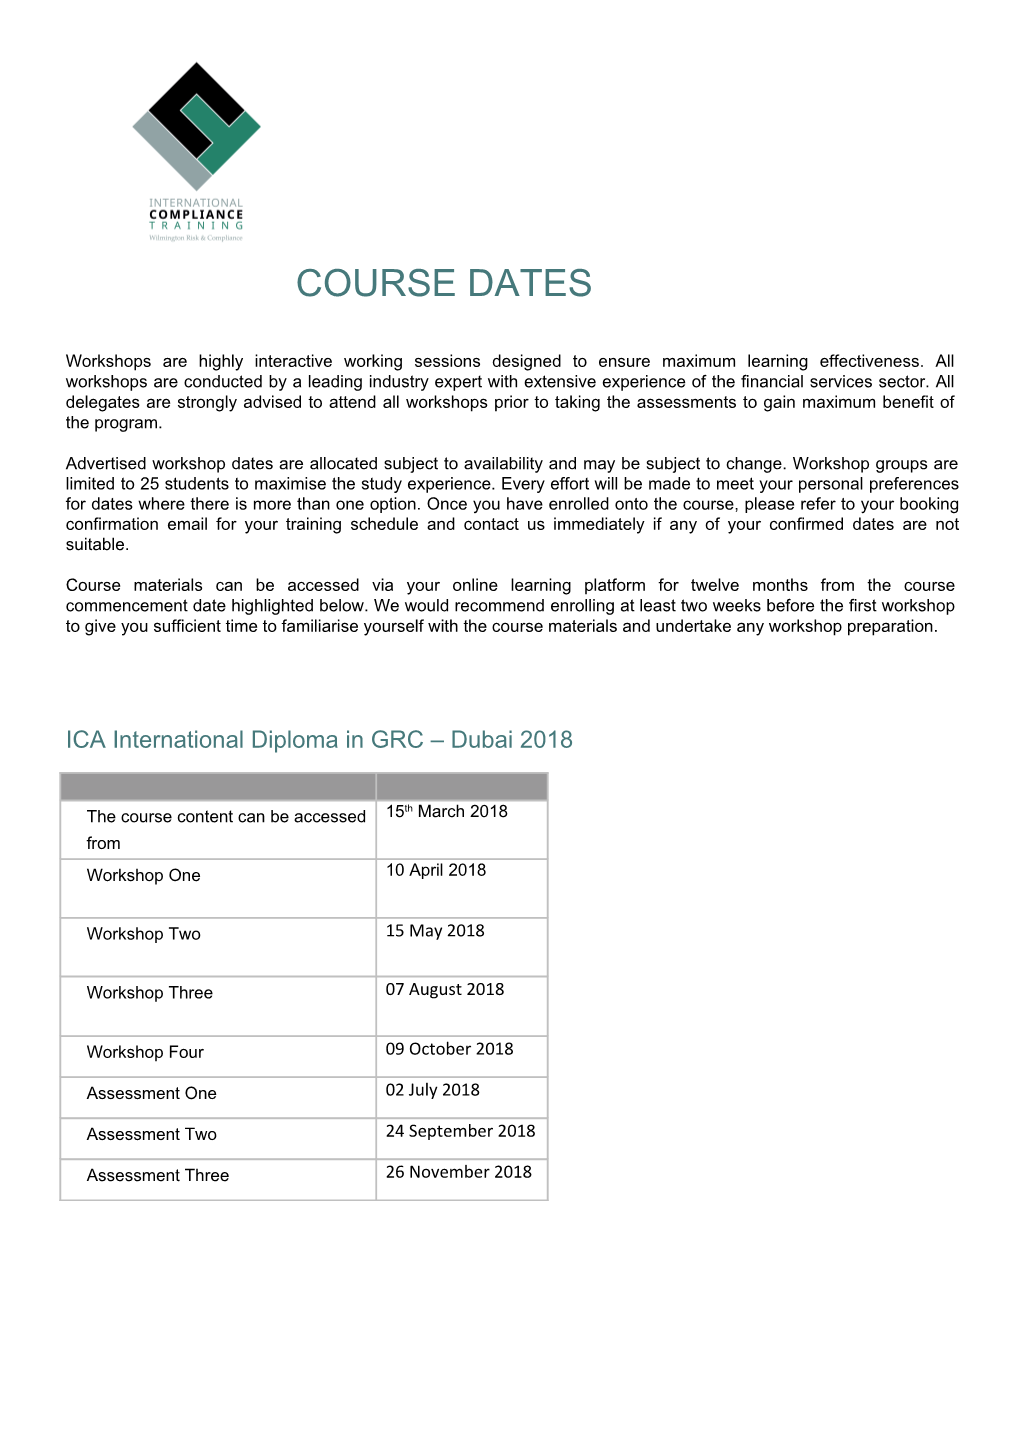 ICA International Diploma in GRC Dubai 2018